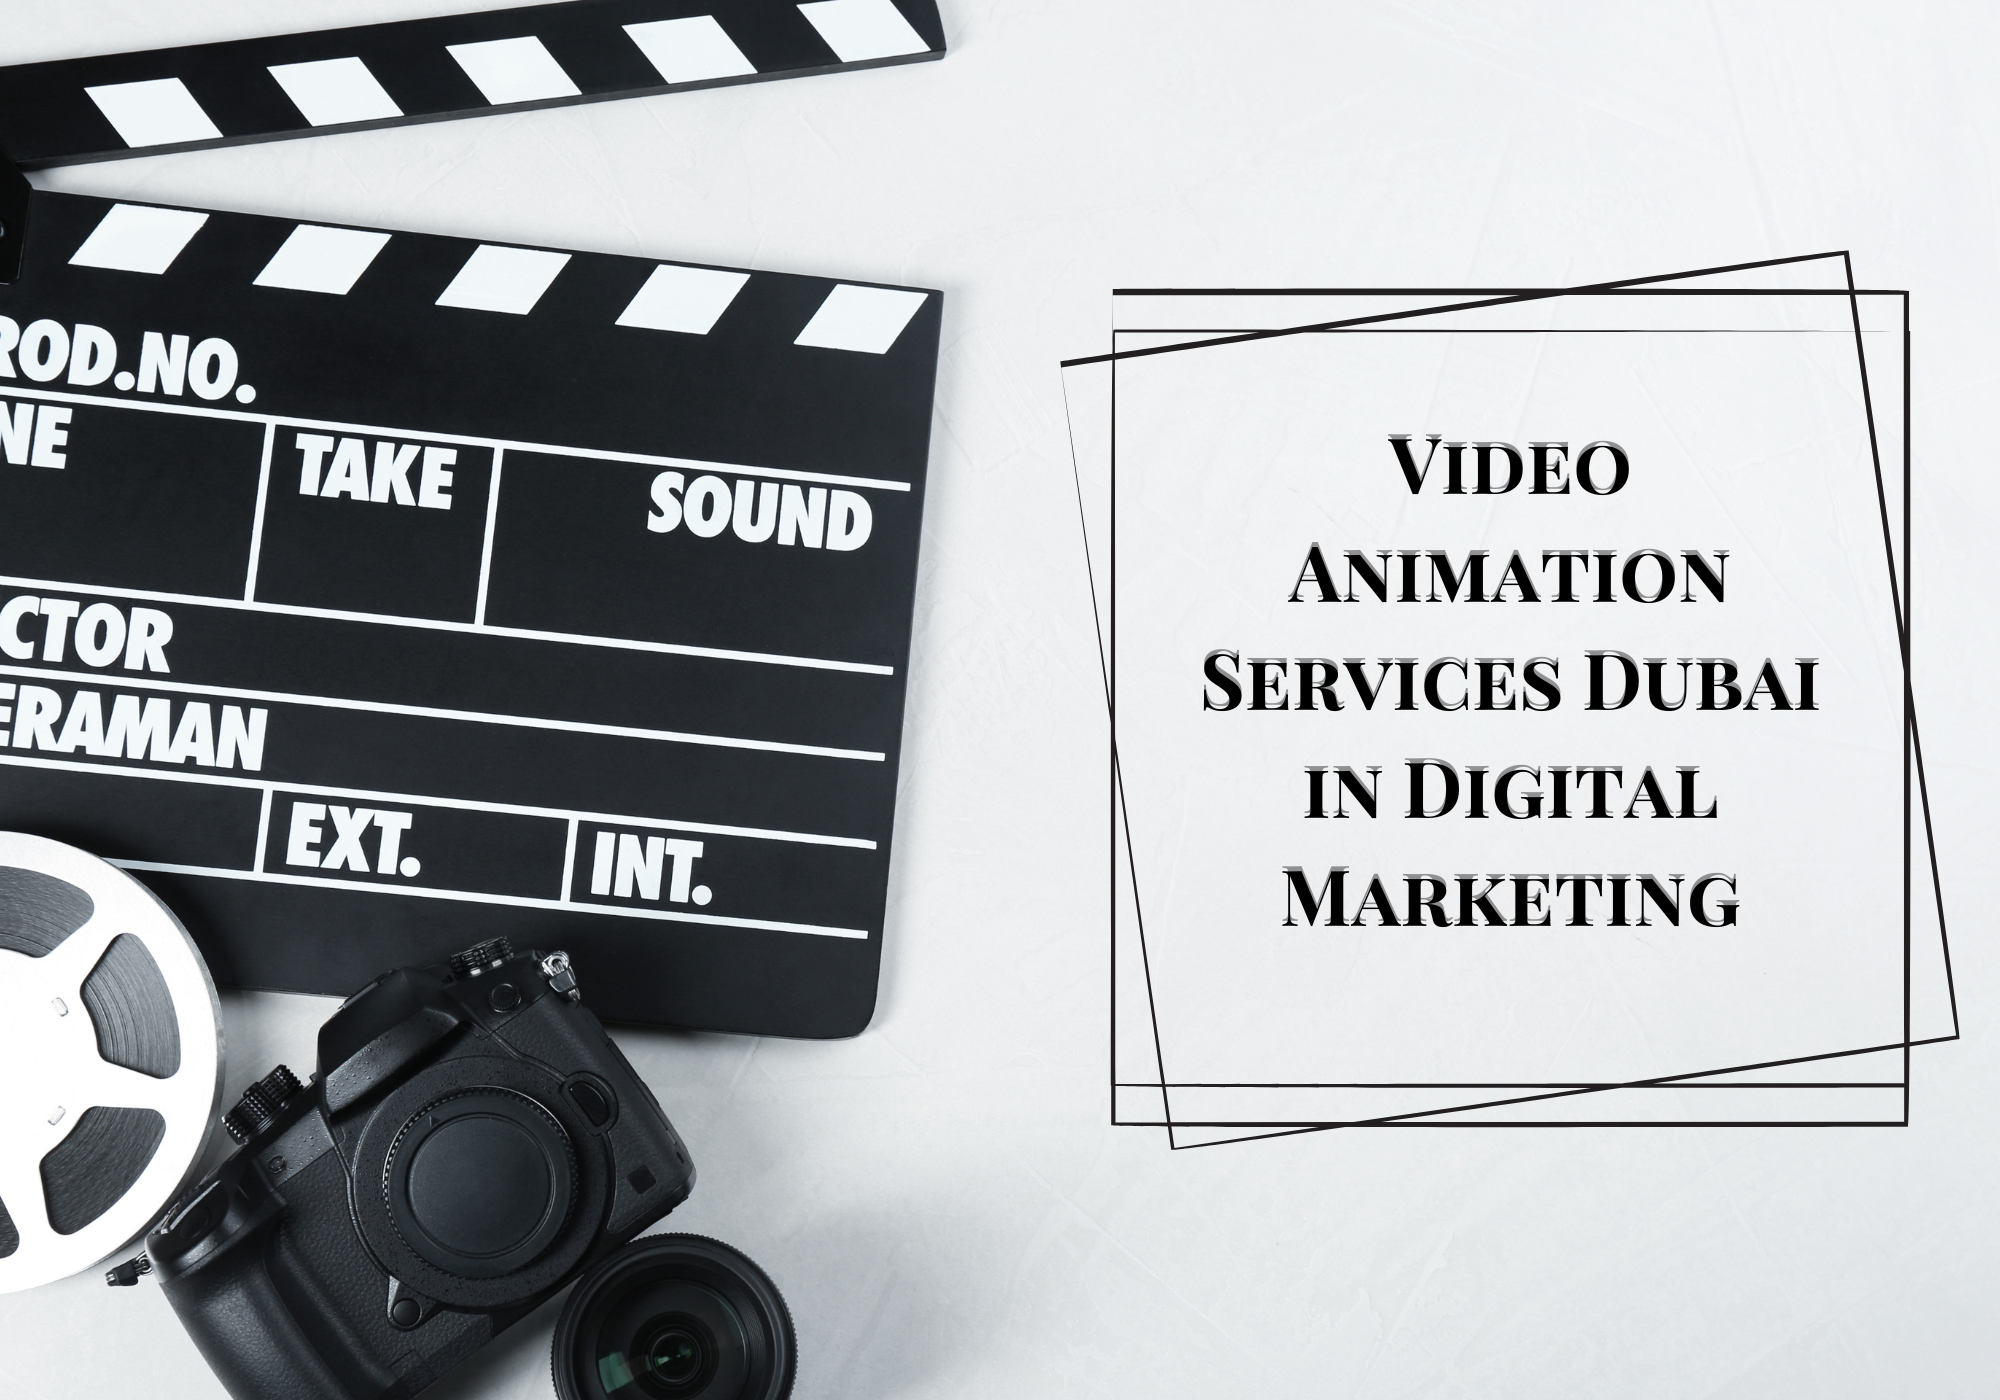 Video Animation Services Dubai in Digital Marketing